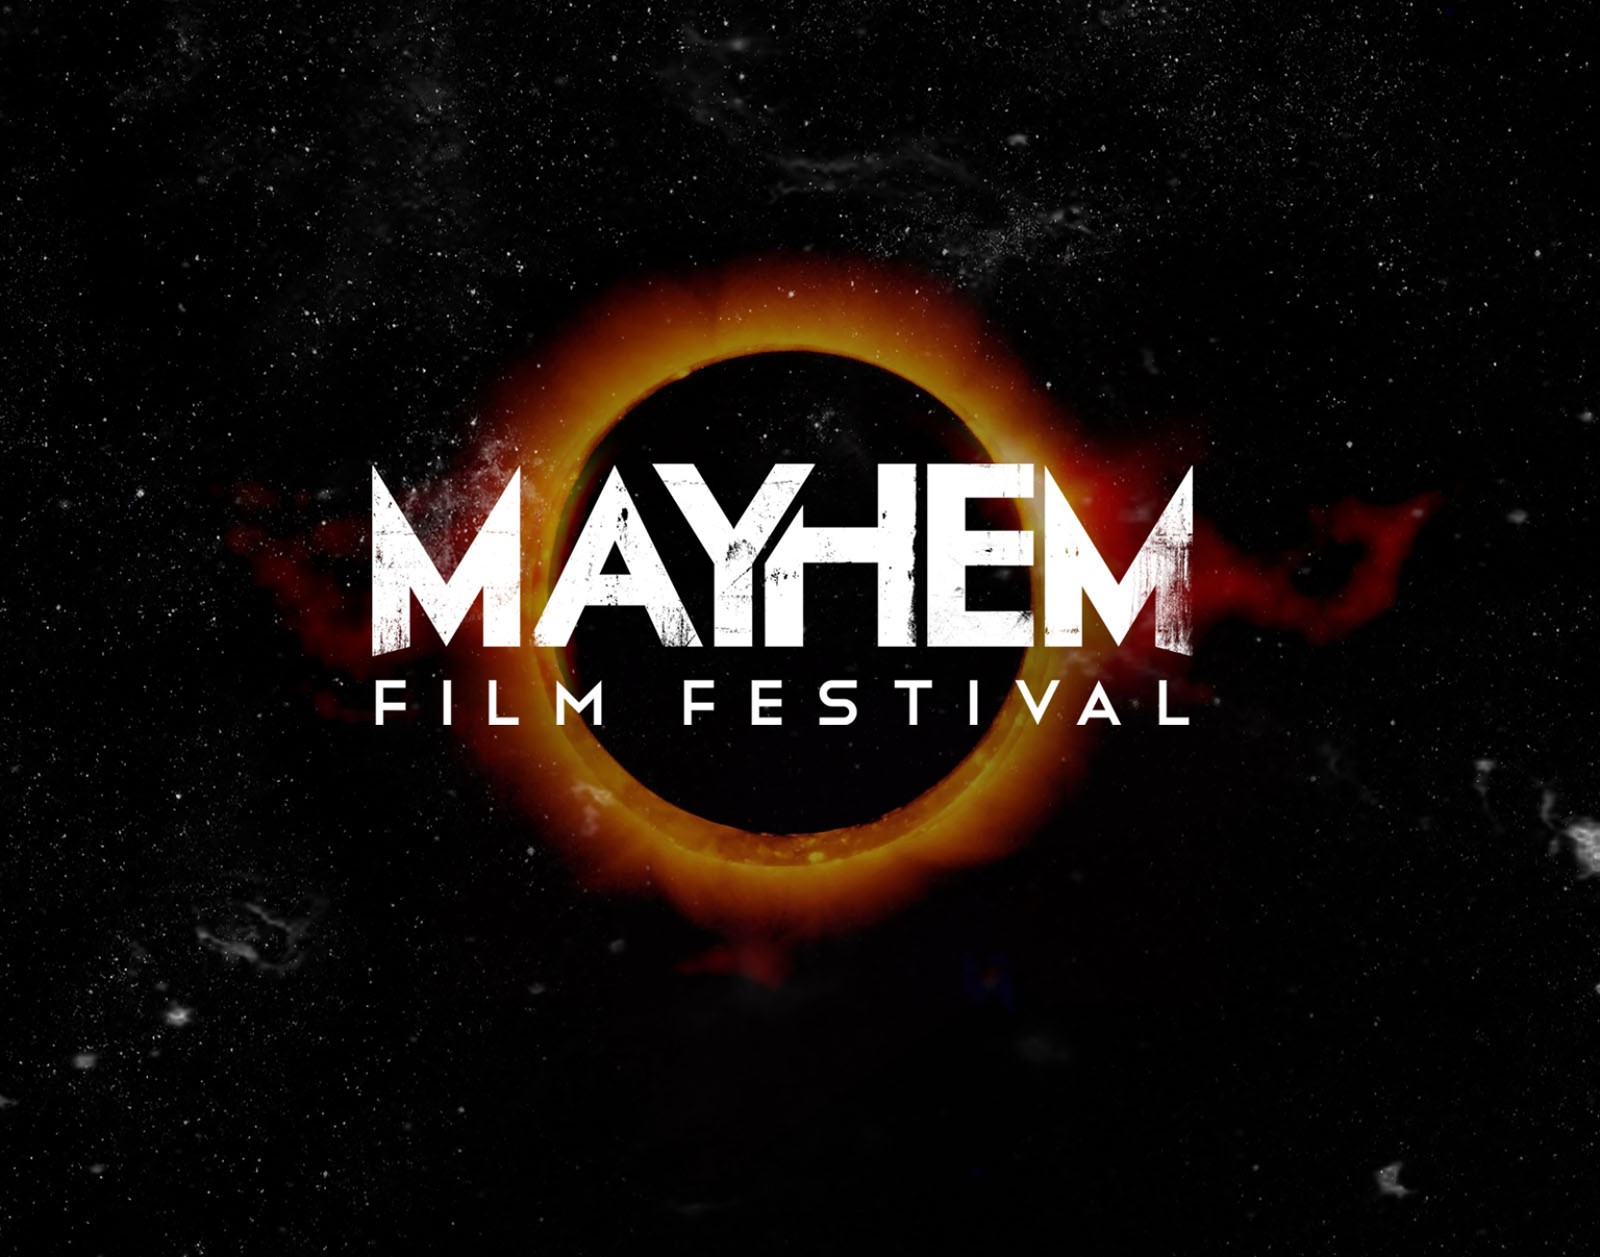 Mayhem Film Festival 2021 Broadway